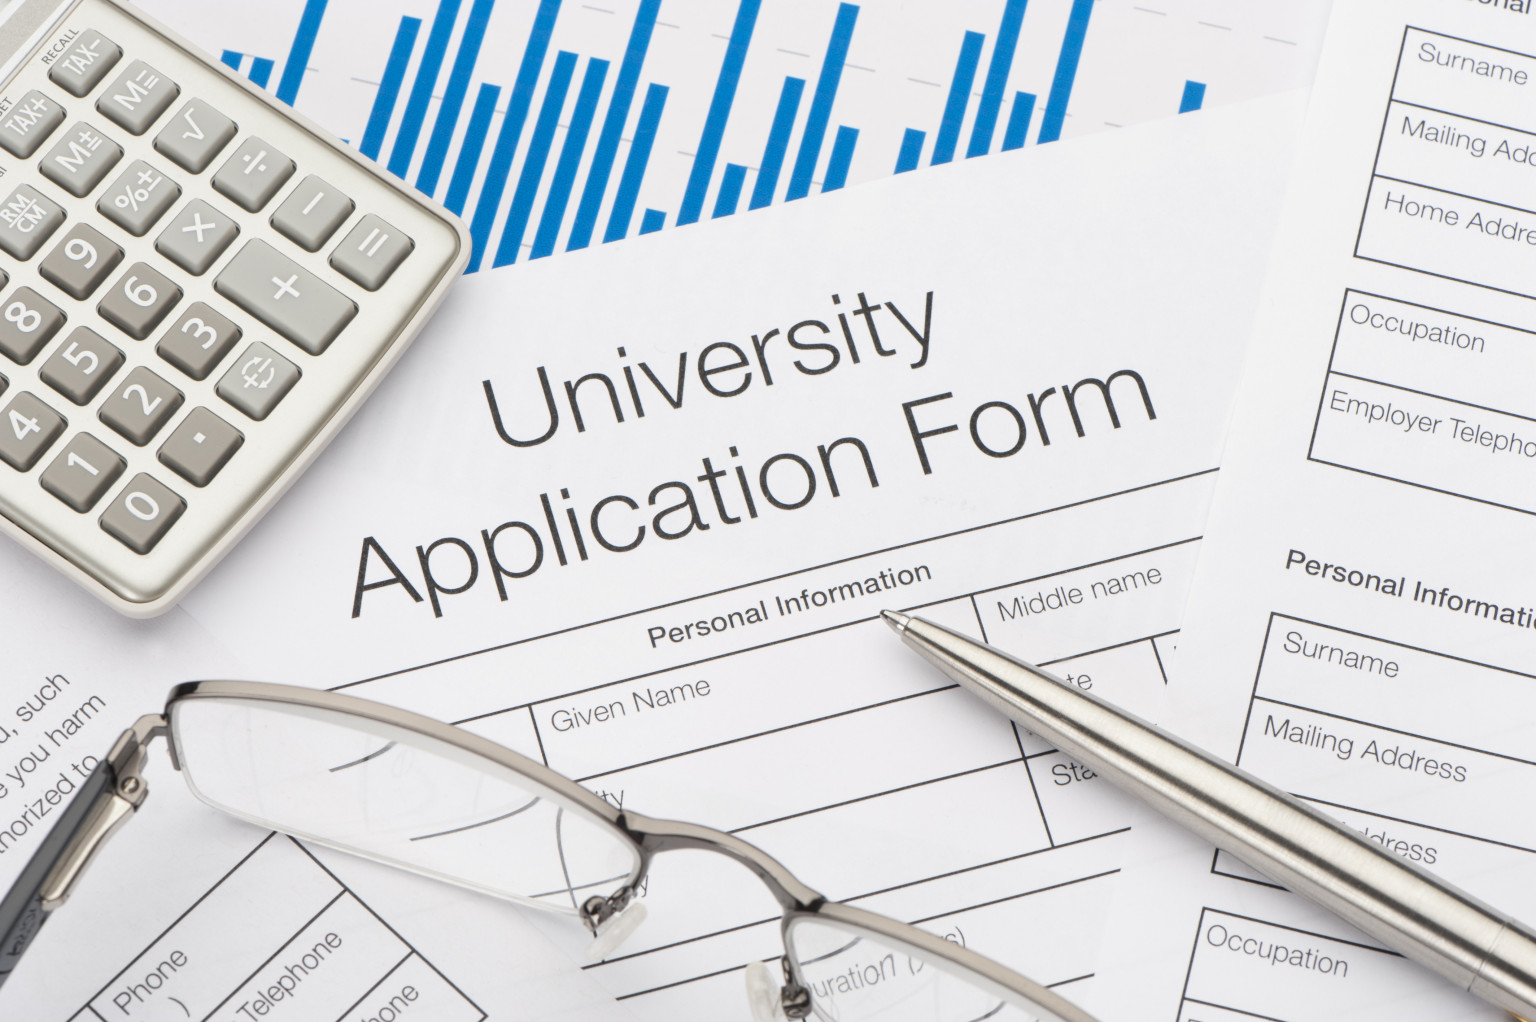 College application essay help online 2013